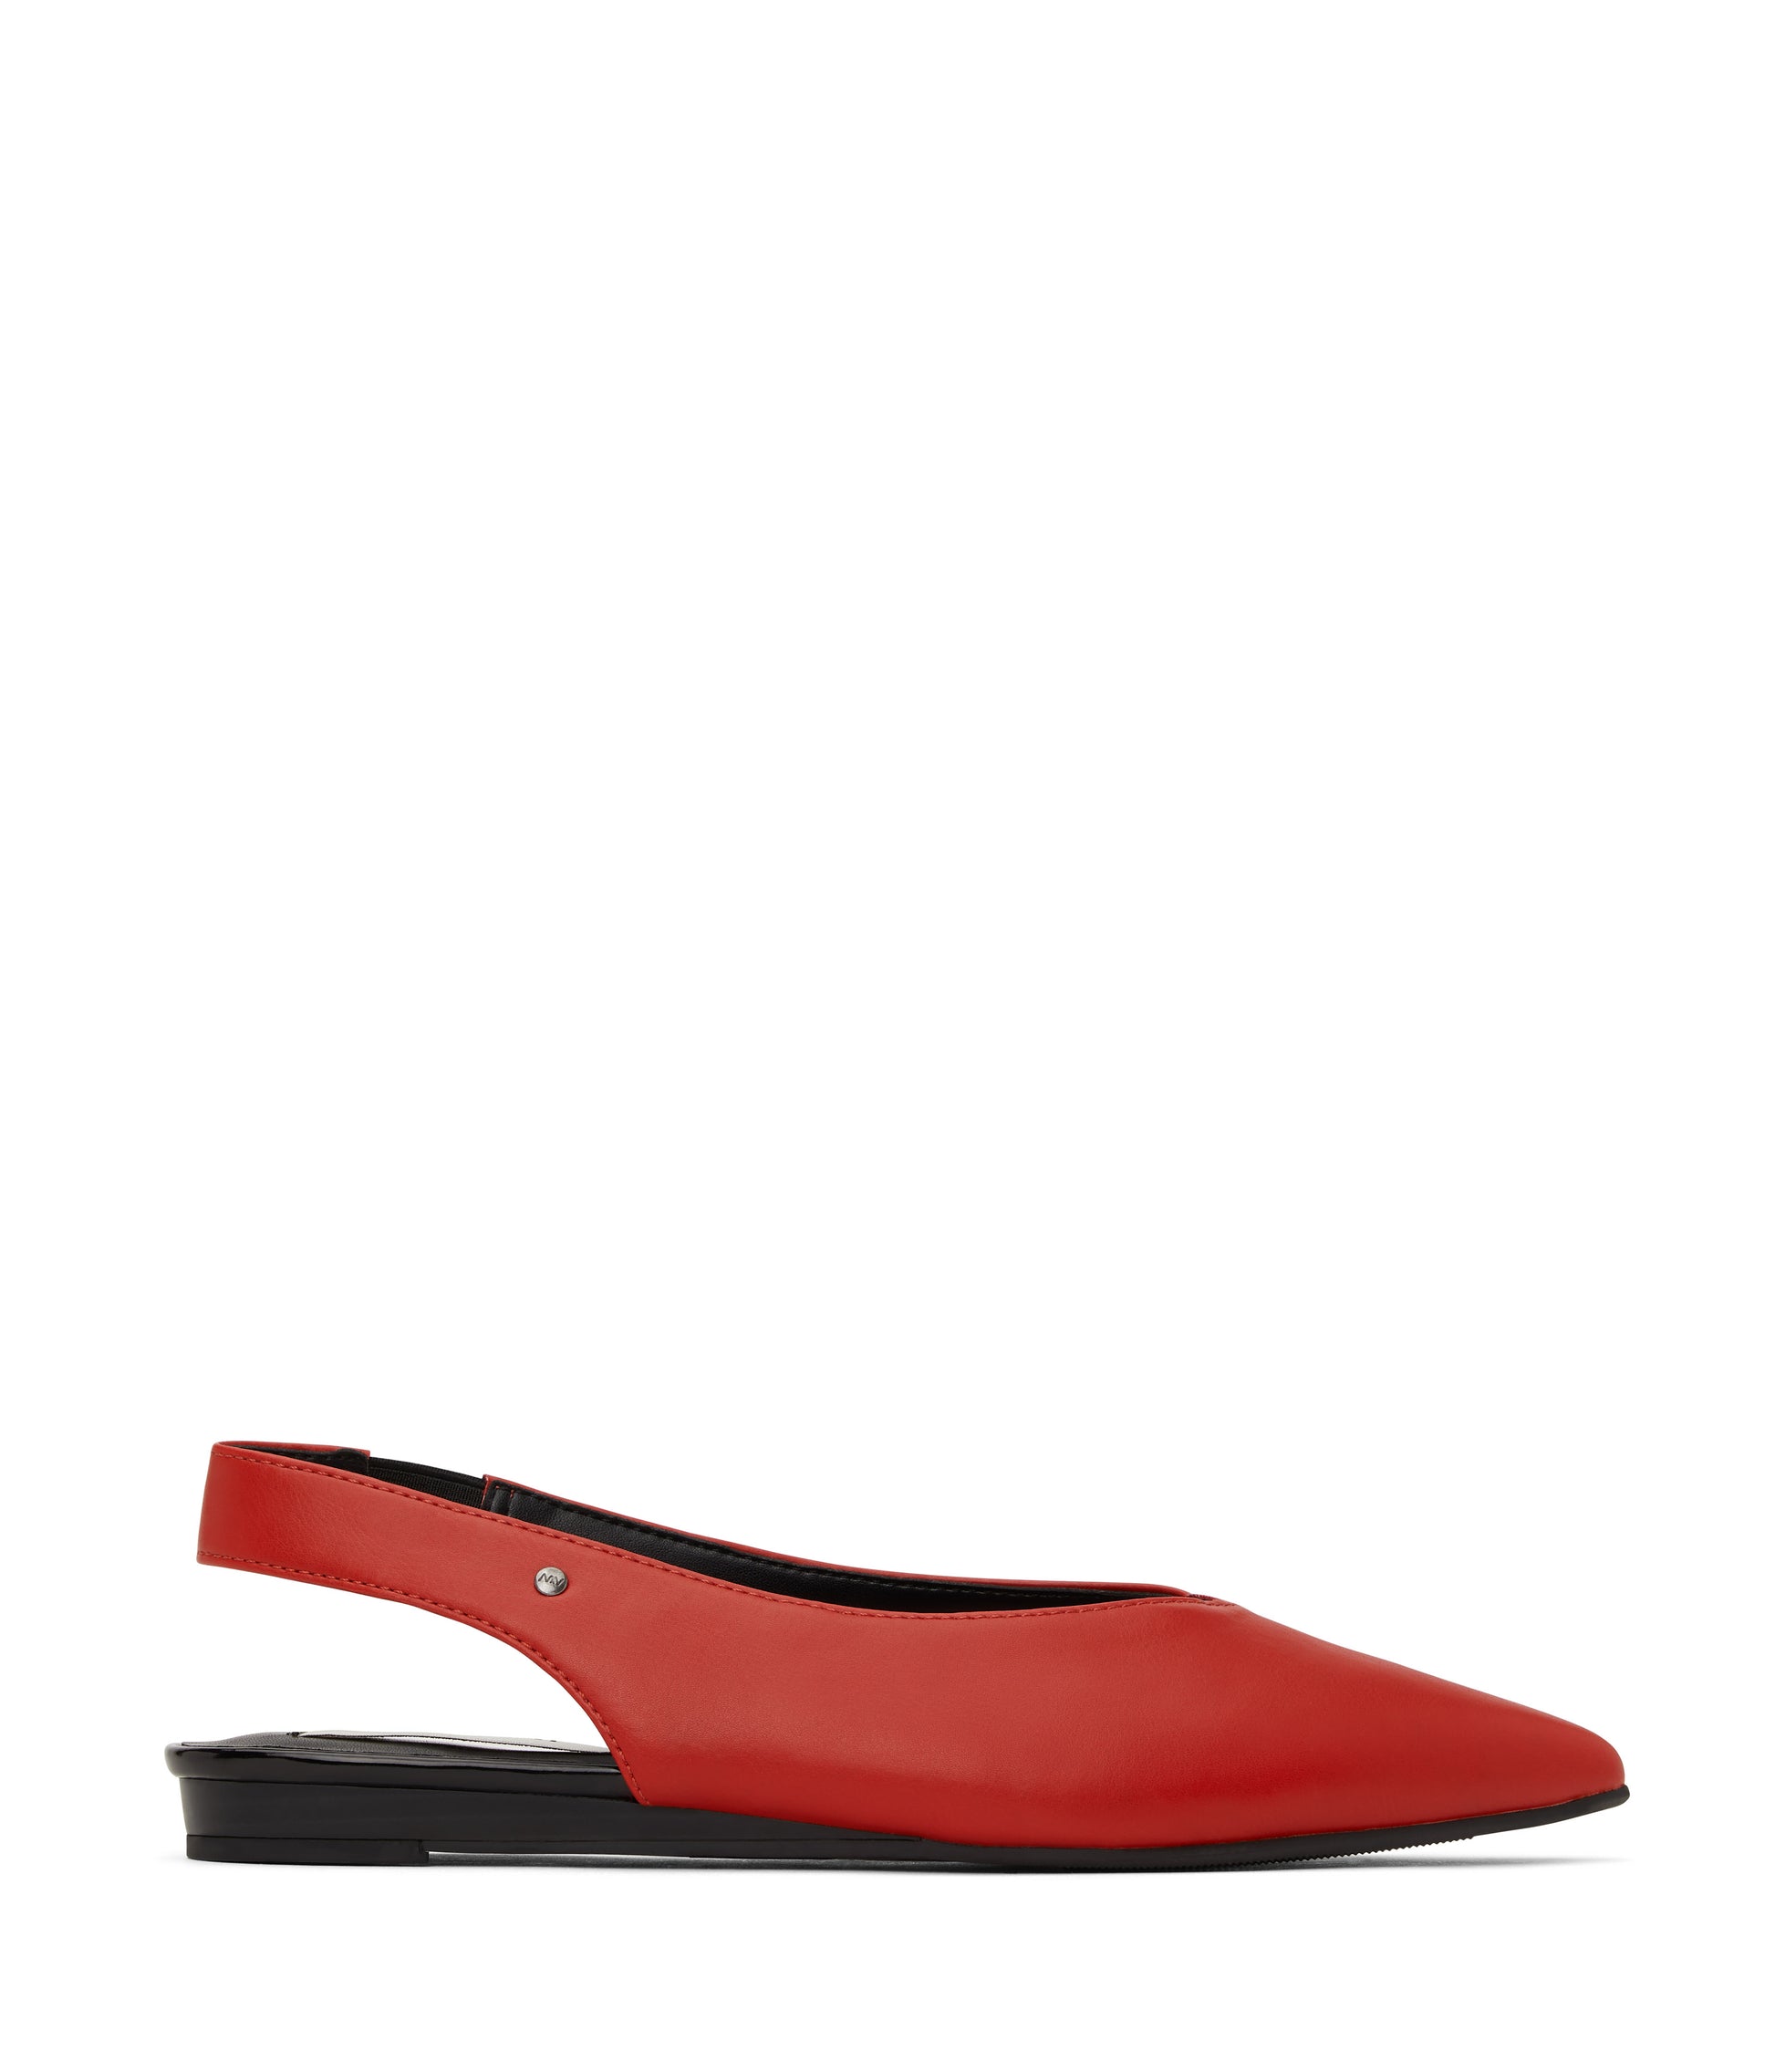 variant::rouge -- effie shoe rouge